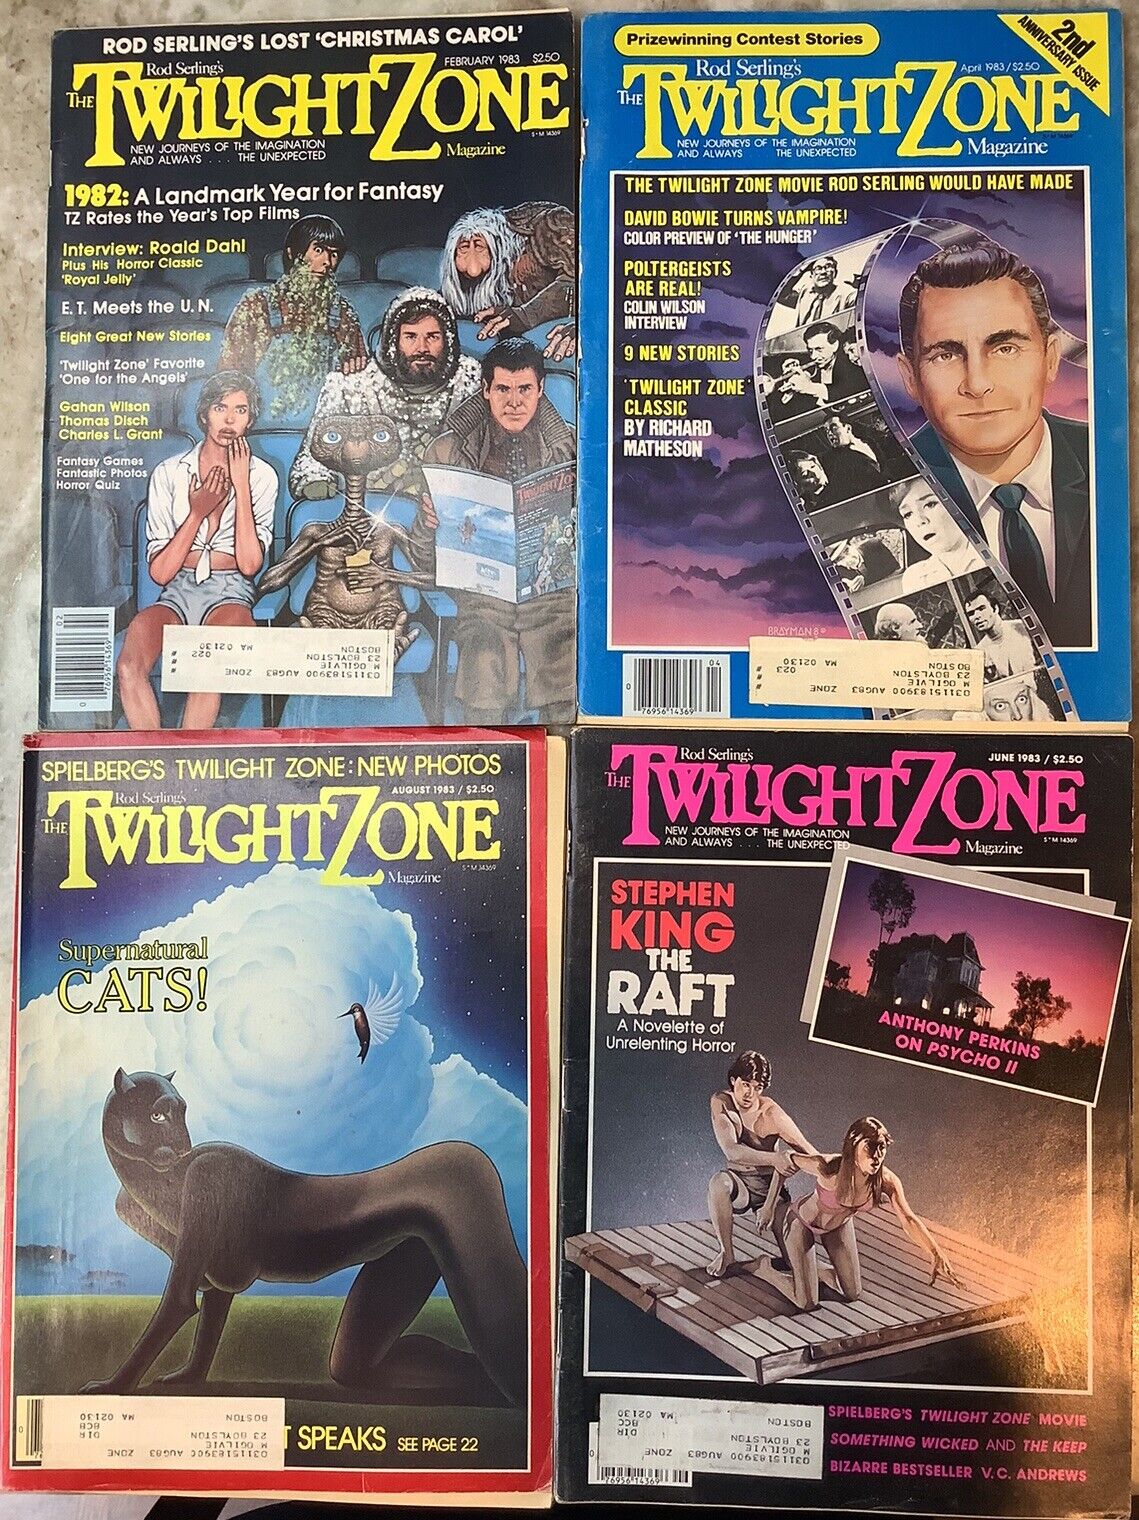 Rod Serling’s Twilight Zone: Feb./ April / June / Aug. 1983 Magazines